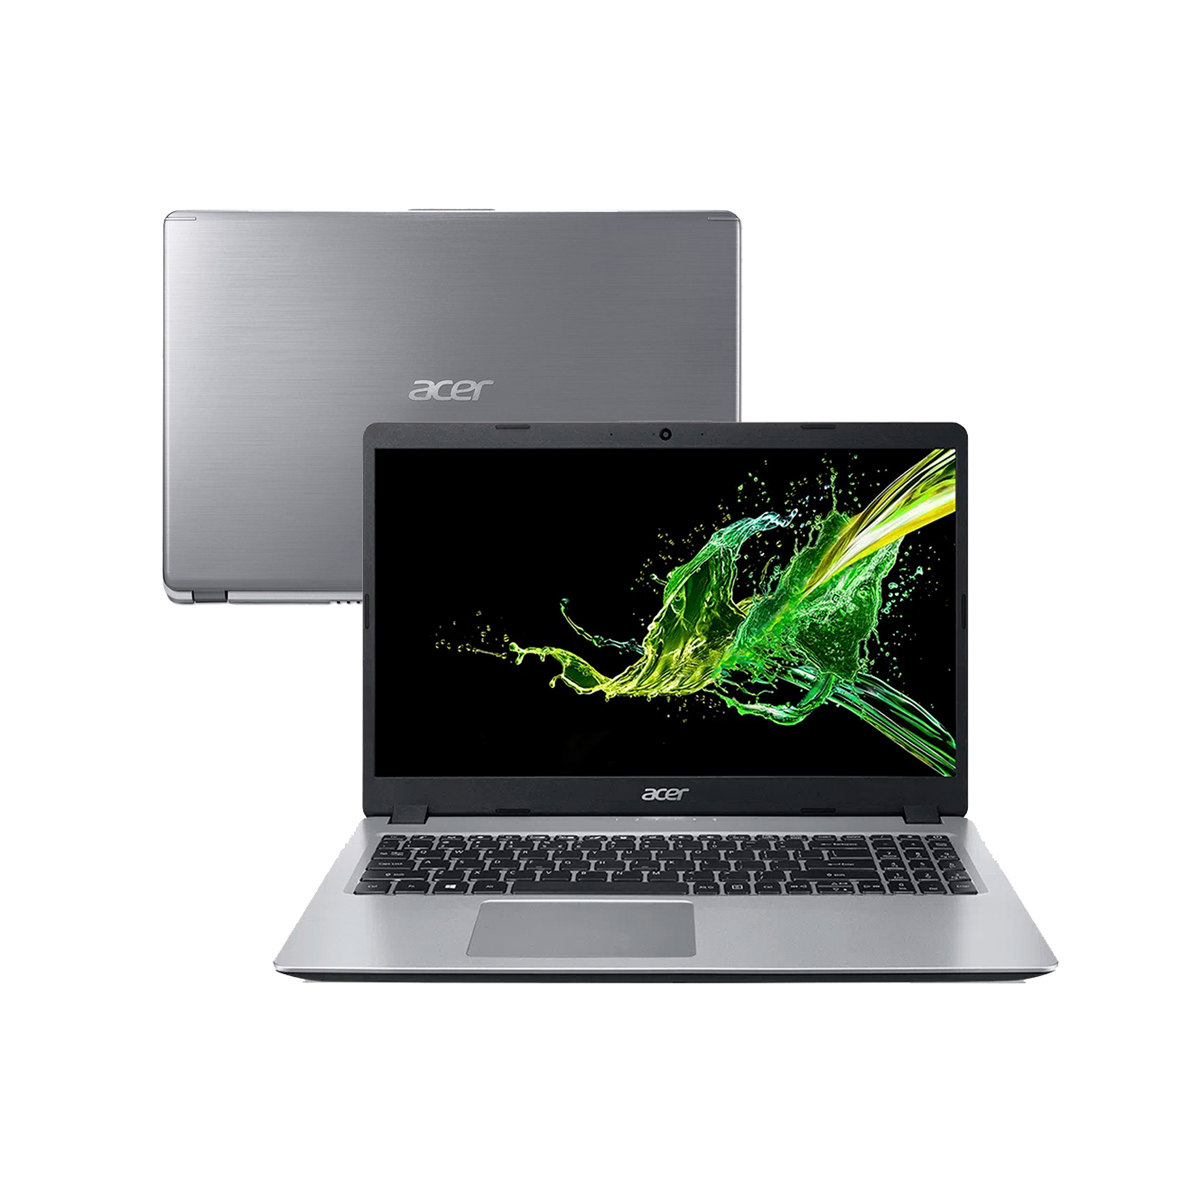 Notebook Acer A515 Core I5 8265u 4gb Ddr4 Hd 1tb Ssd 480gb Tela 15.6' Led Hd Windows 10 Home